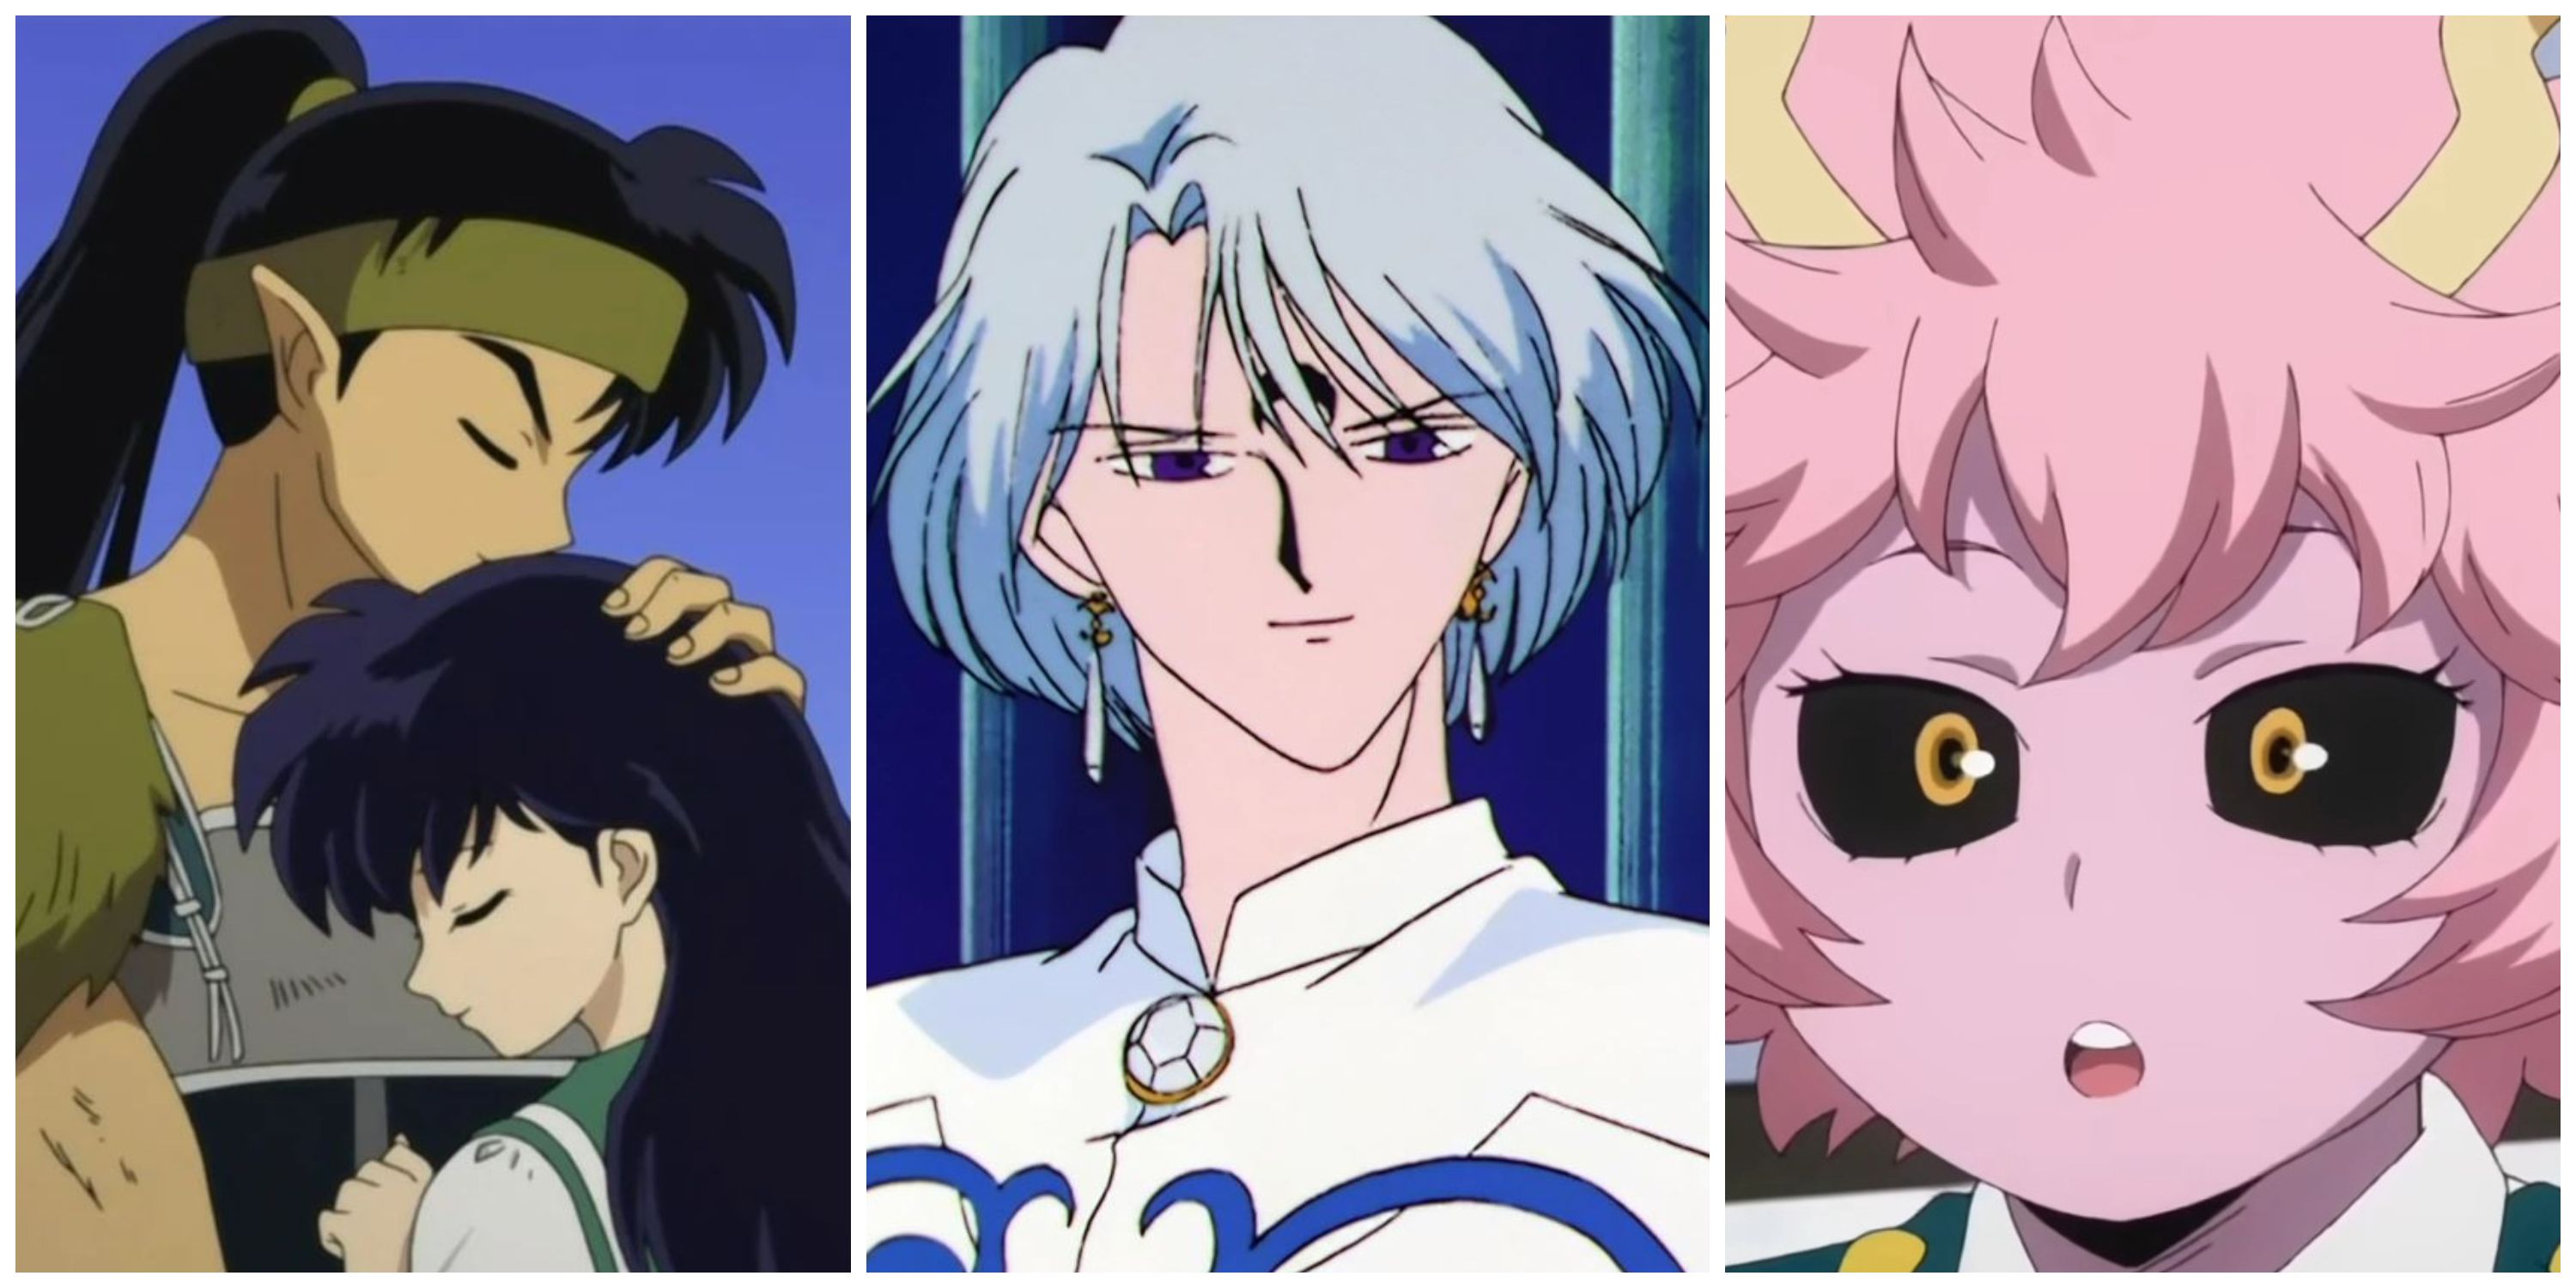 Koga and Kagome from InuYasha, Prince Demande from Sailor Moon, and Mina from My Hero Academia.